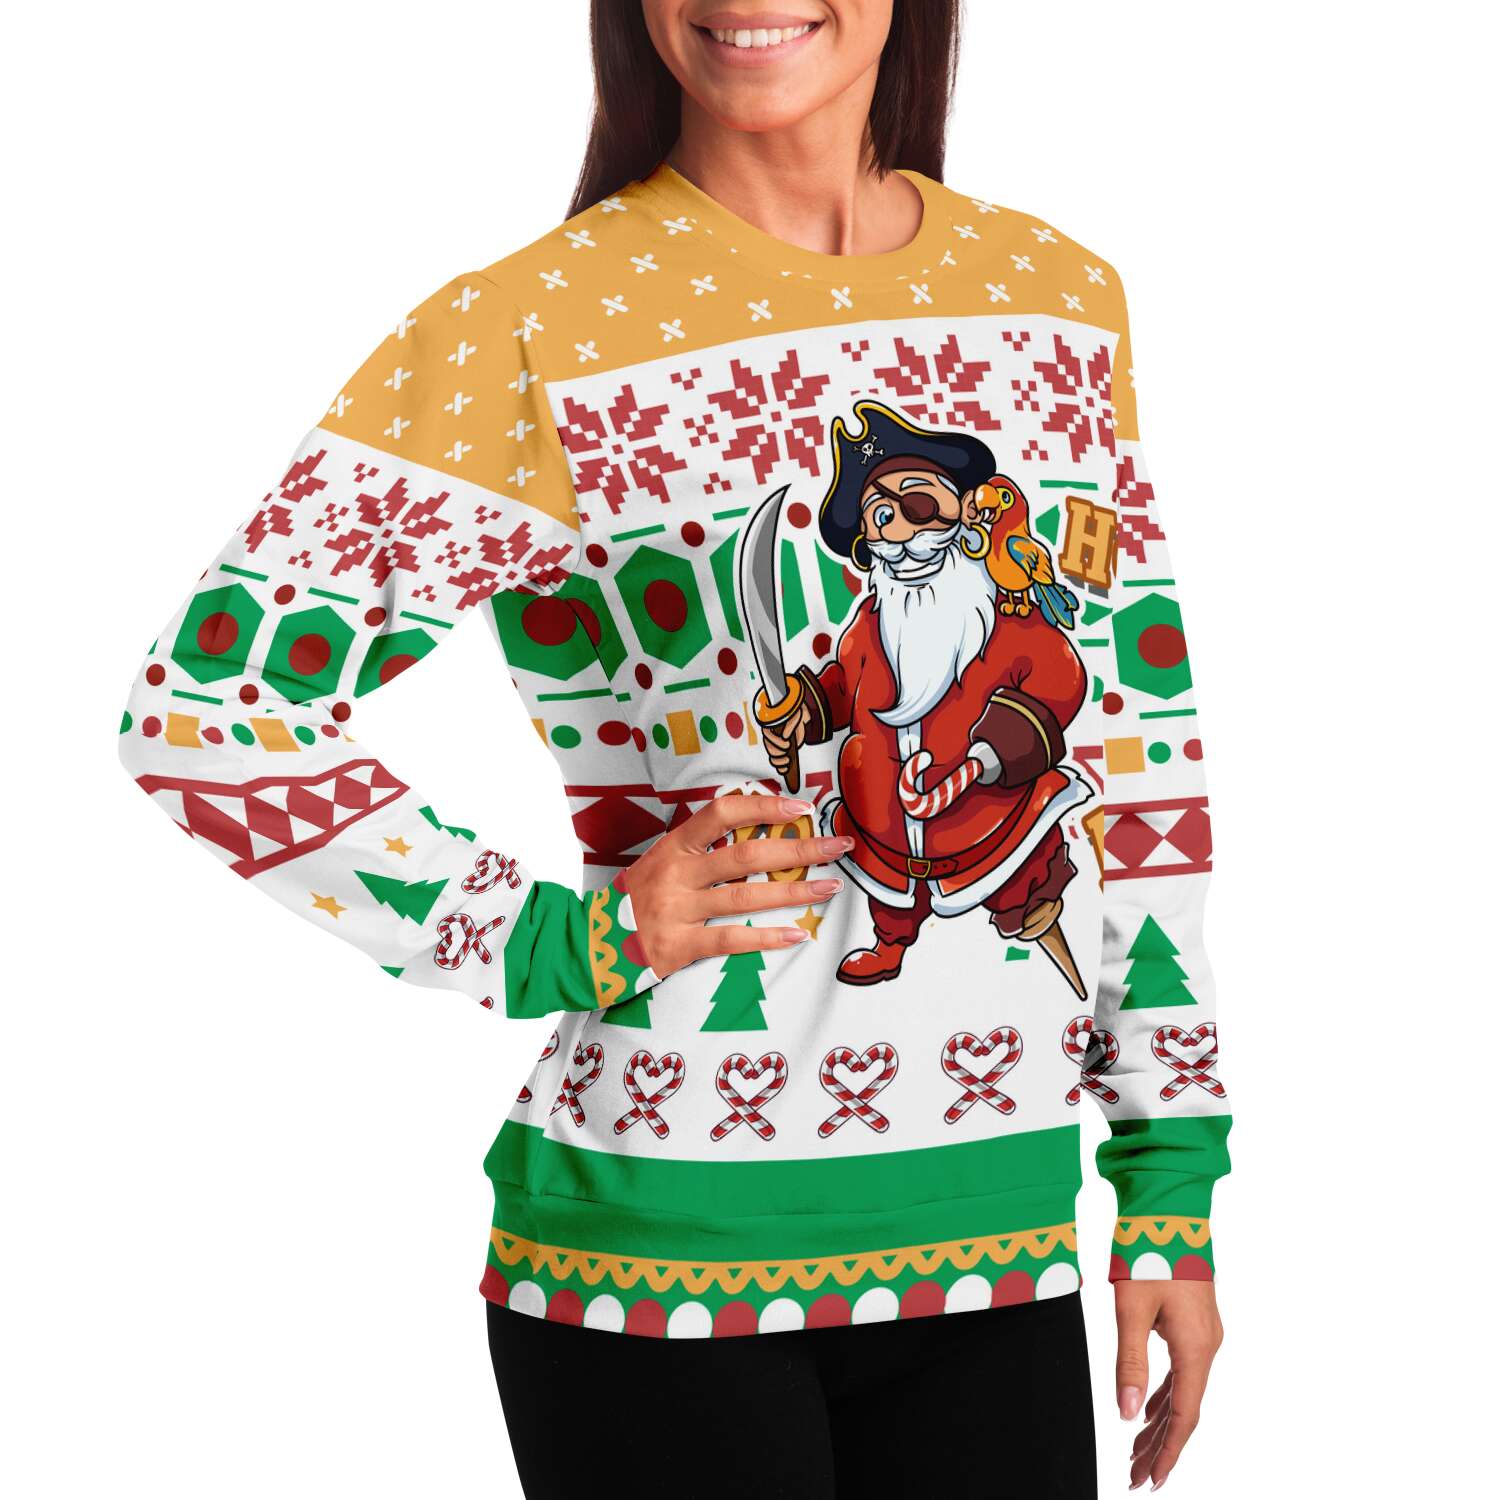 Yo Ho Ho Pirate Sweatshirt | Unisex Ugly Christmas Sweater, Xmas Sweater, Holiday Sweater, Festive Sweater, Funny Sweater, Funny Party Shirt